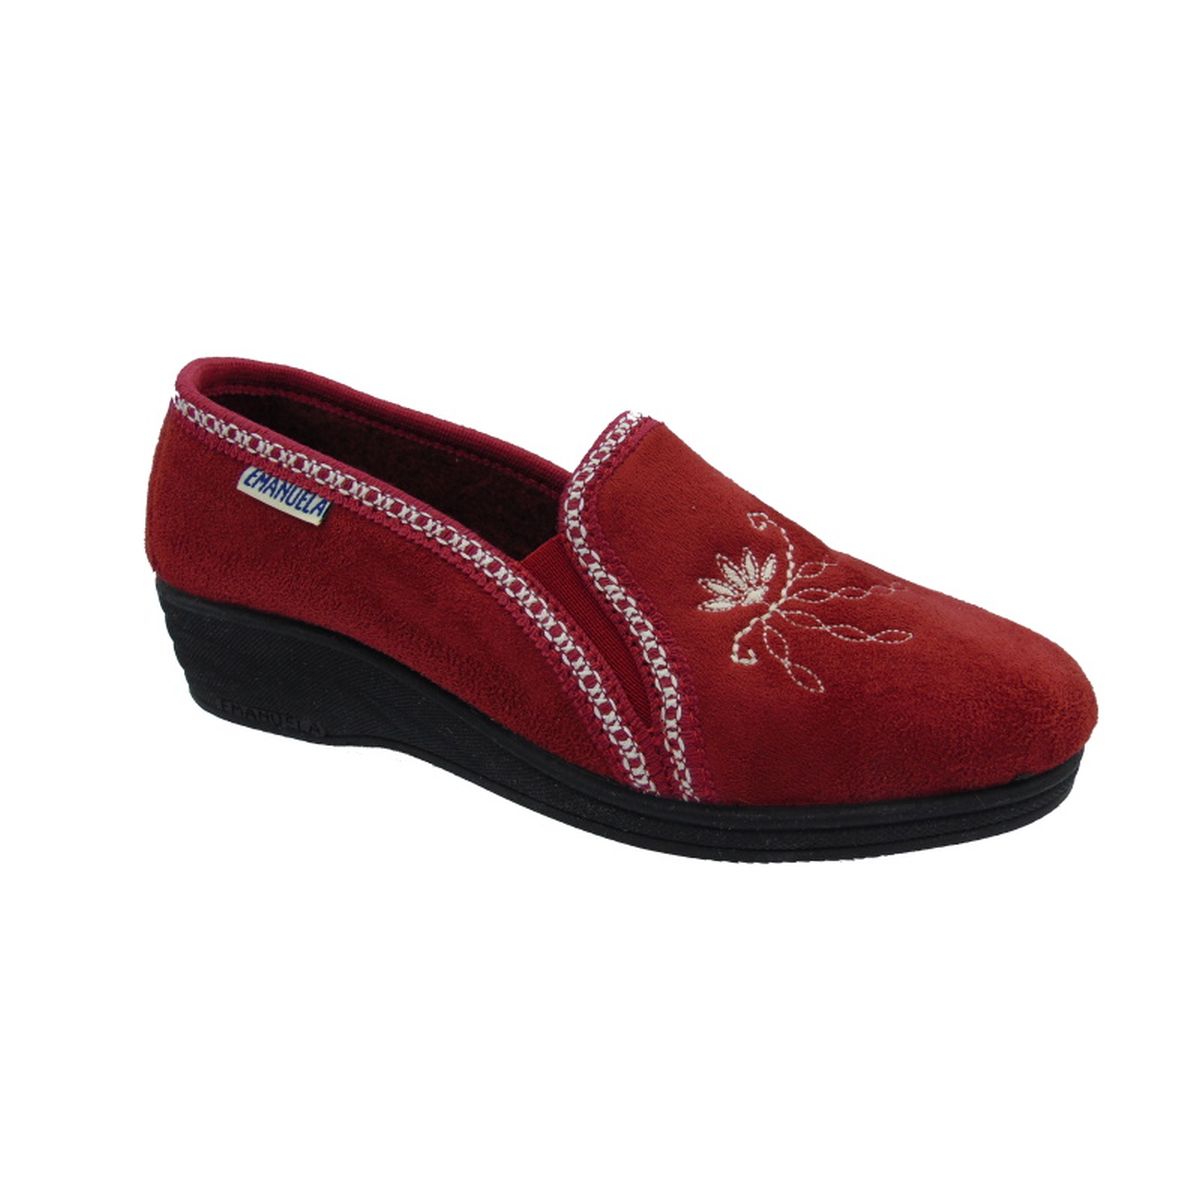 Pantofola Donna con elastici laterali Emanuela 855 Bordeaux